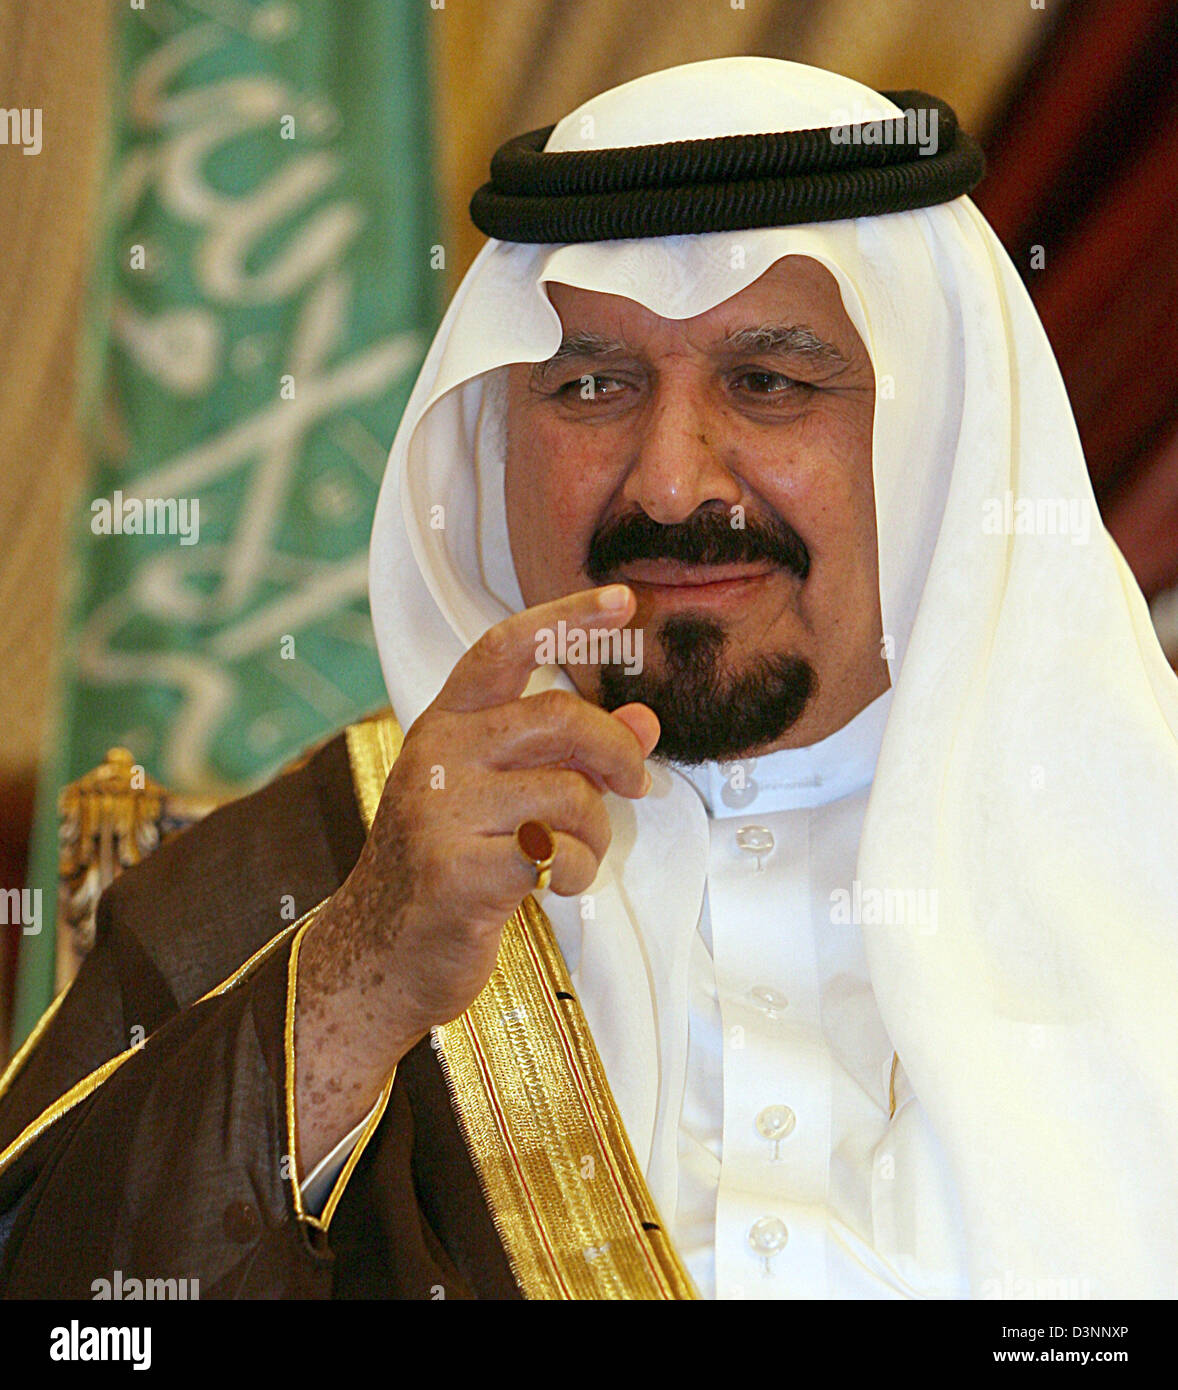 The Saudi Arabian Crown Prince Sultan bin Abd al-Aziz is pictured in Riad, Saudi Arabia, 23 May 2006. Photo: Tim Brakemeier Stock Photo